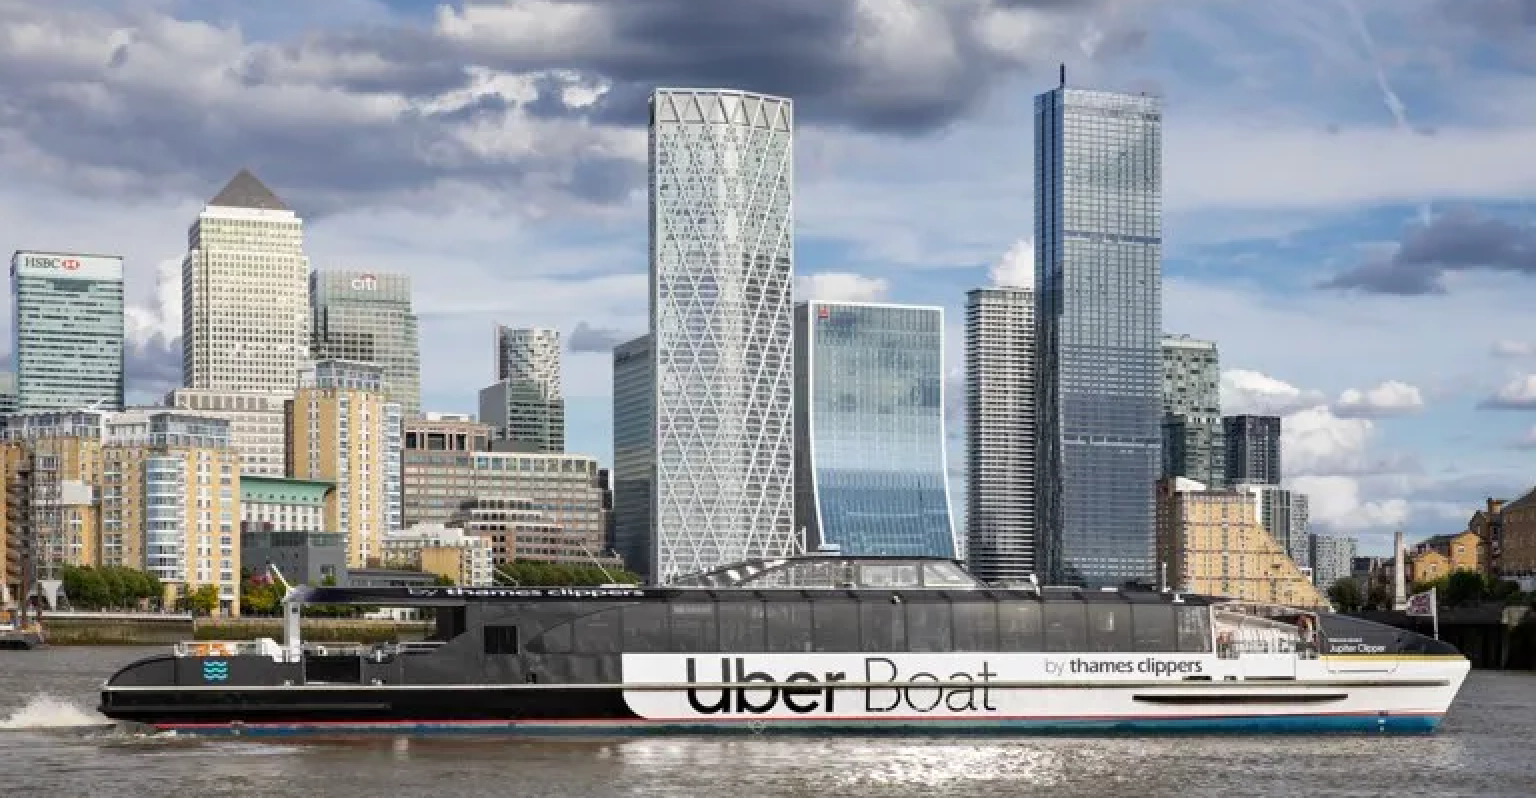 Uber electric ferries, London, Uber Boat